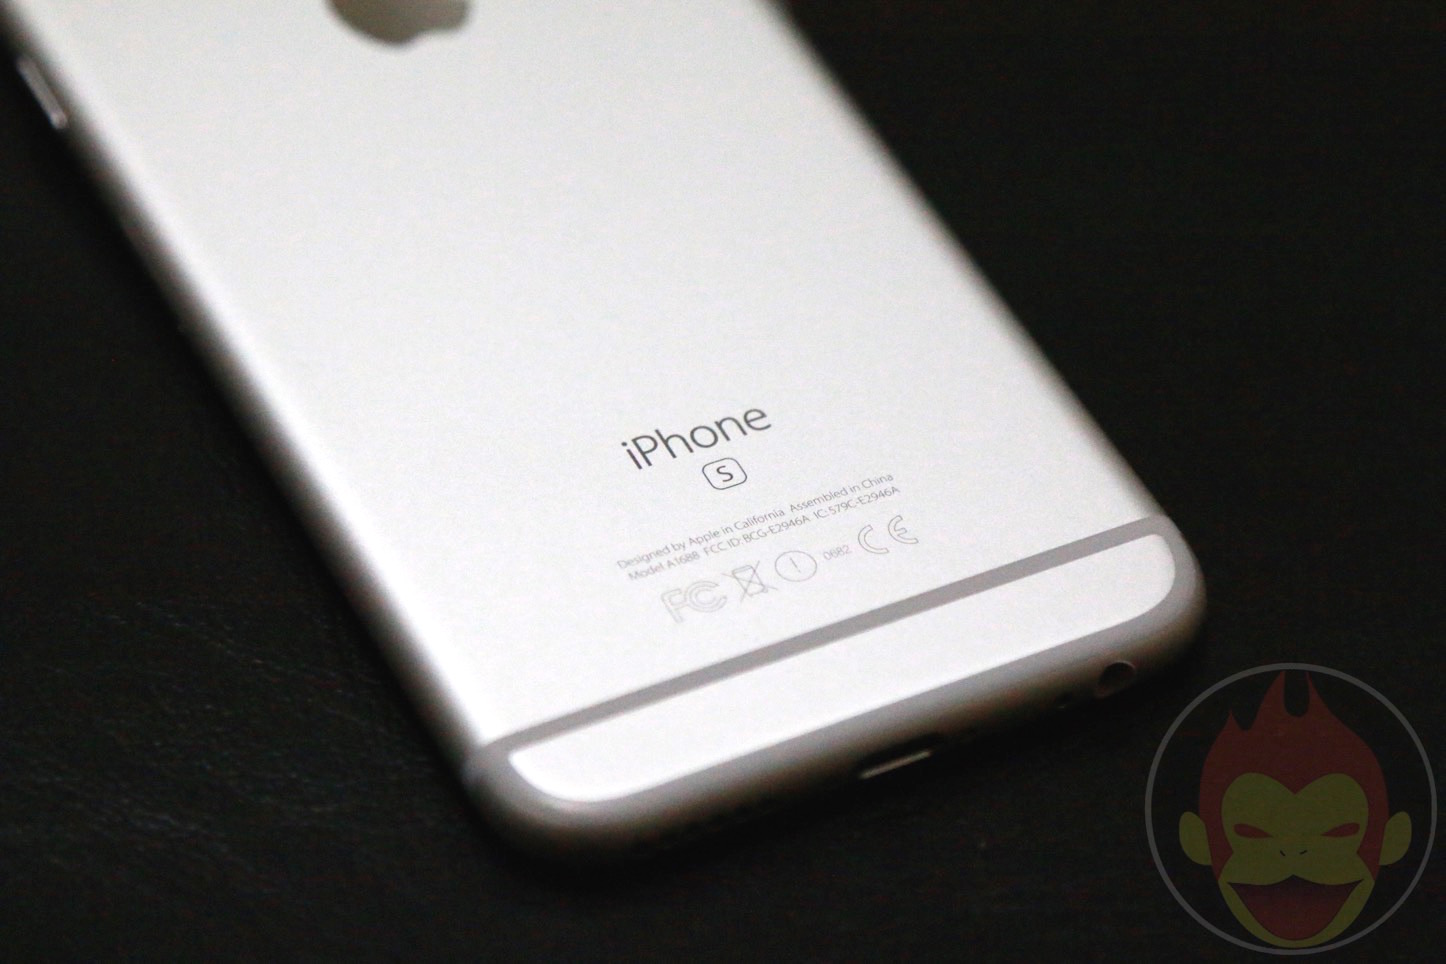 iPhone6s-Silver-128GB-14.jpg